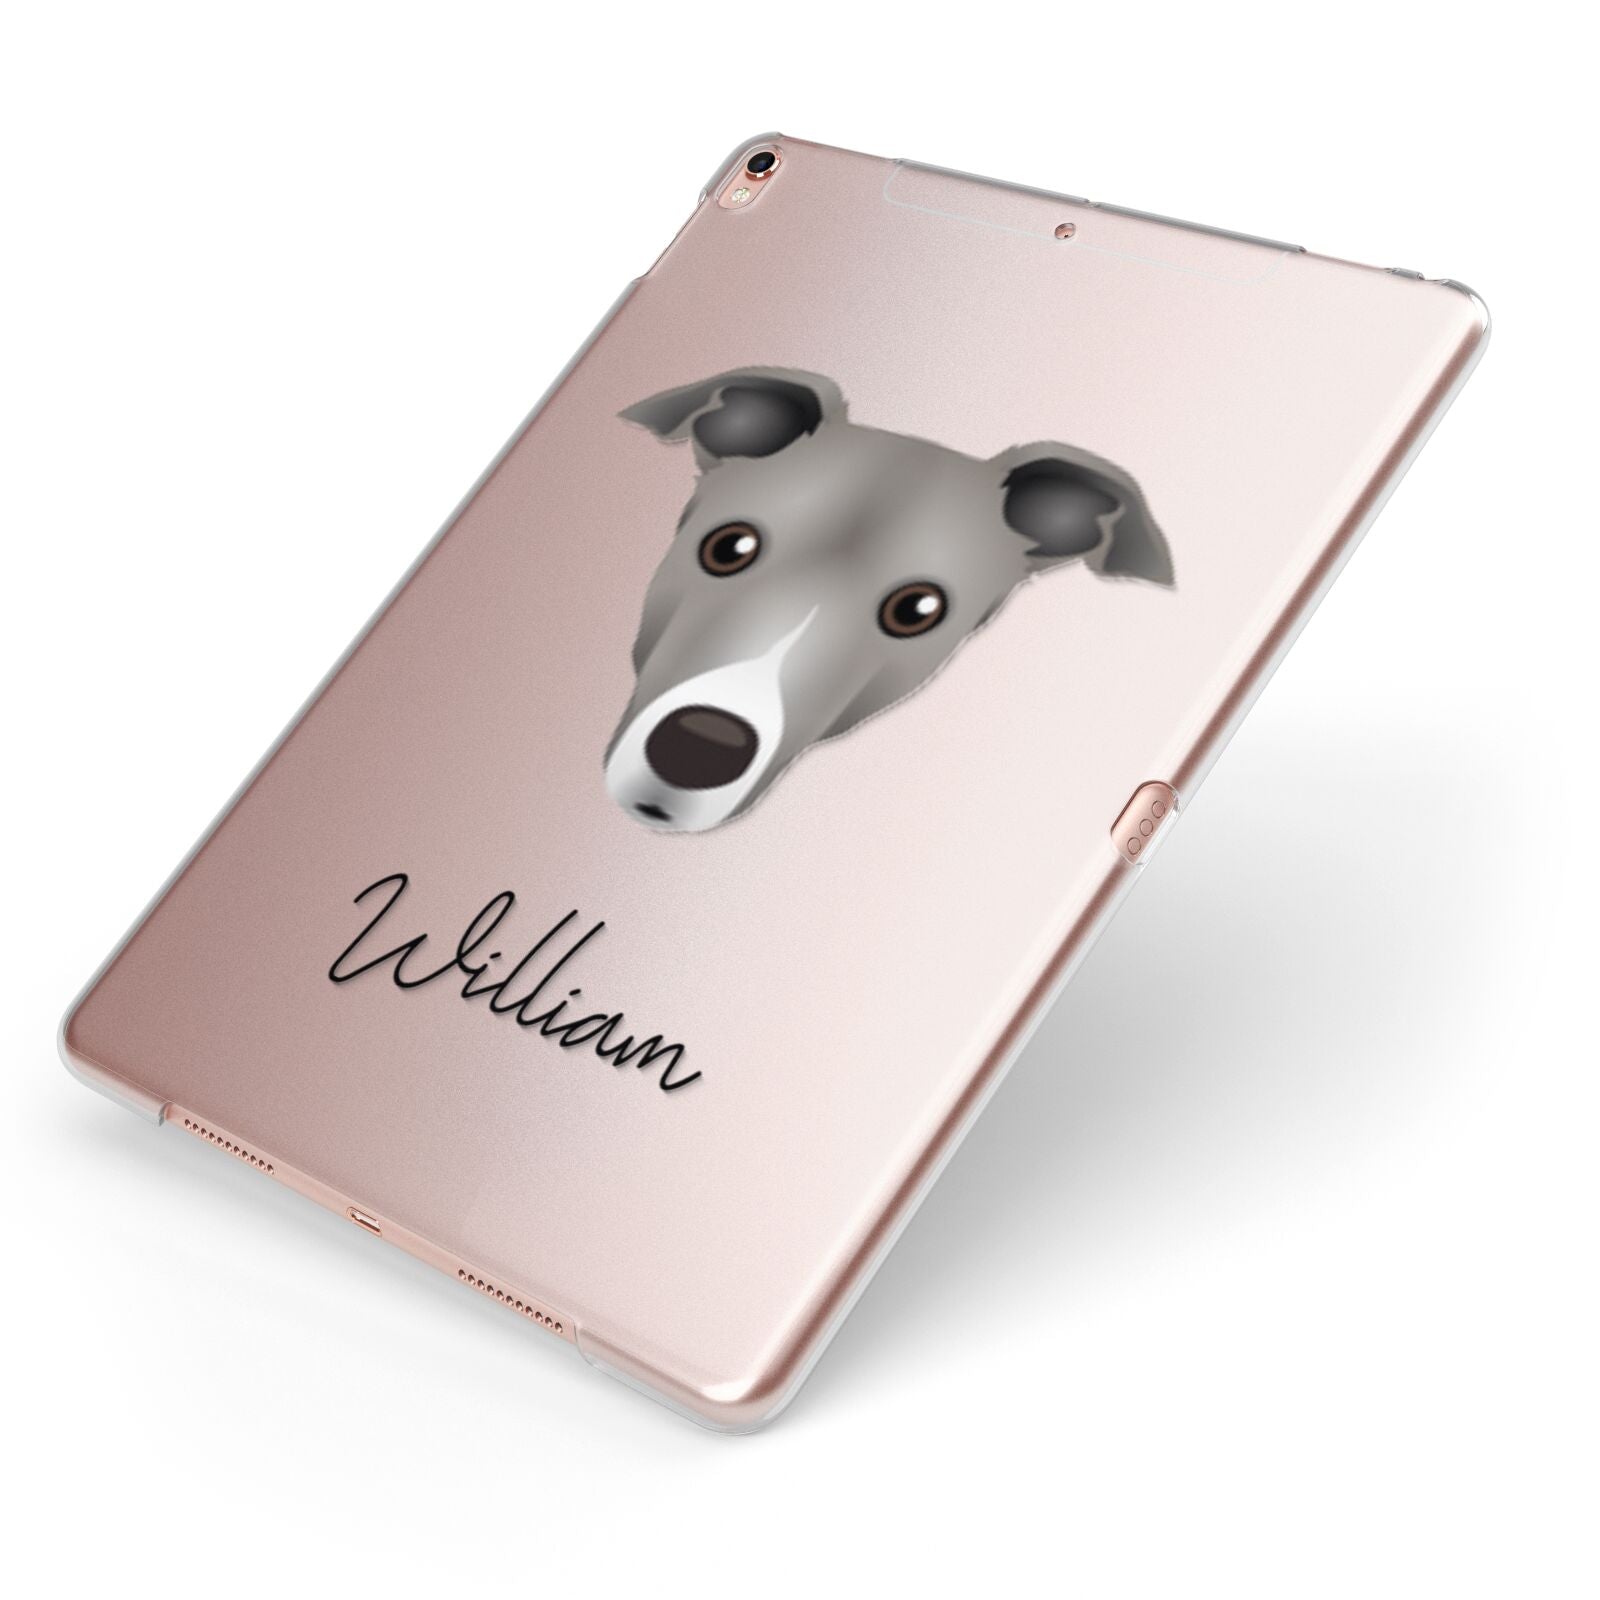 Italian Greyhound Personalised Apple iPad Case on Rose Gold iPad Side View